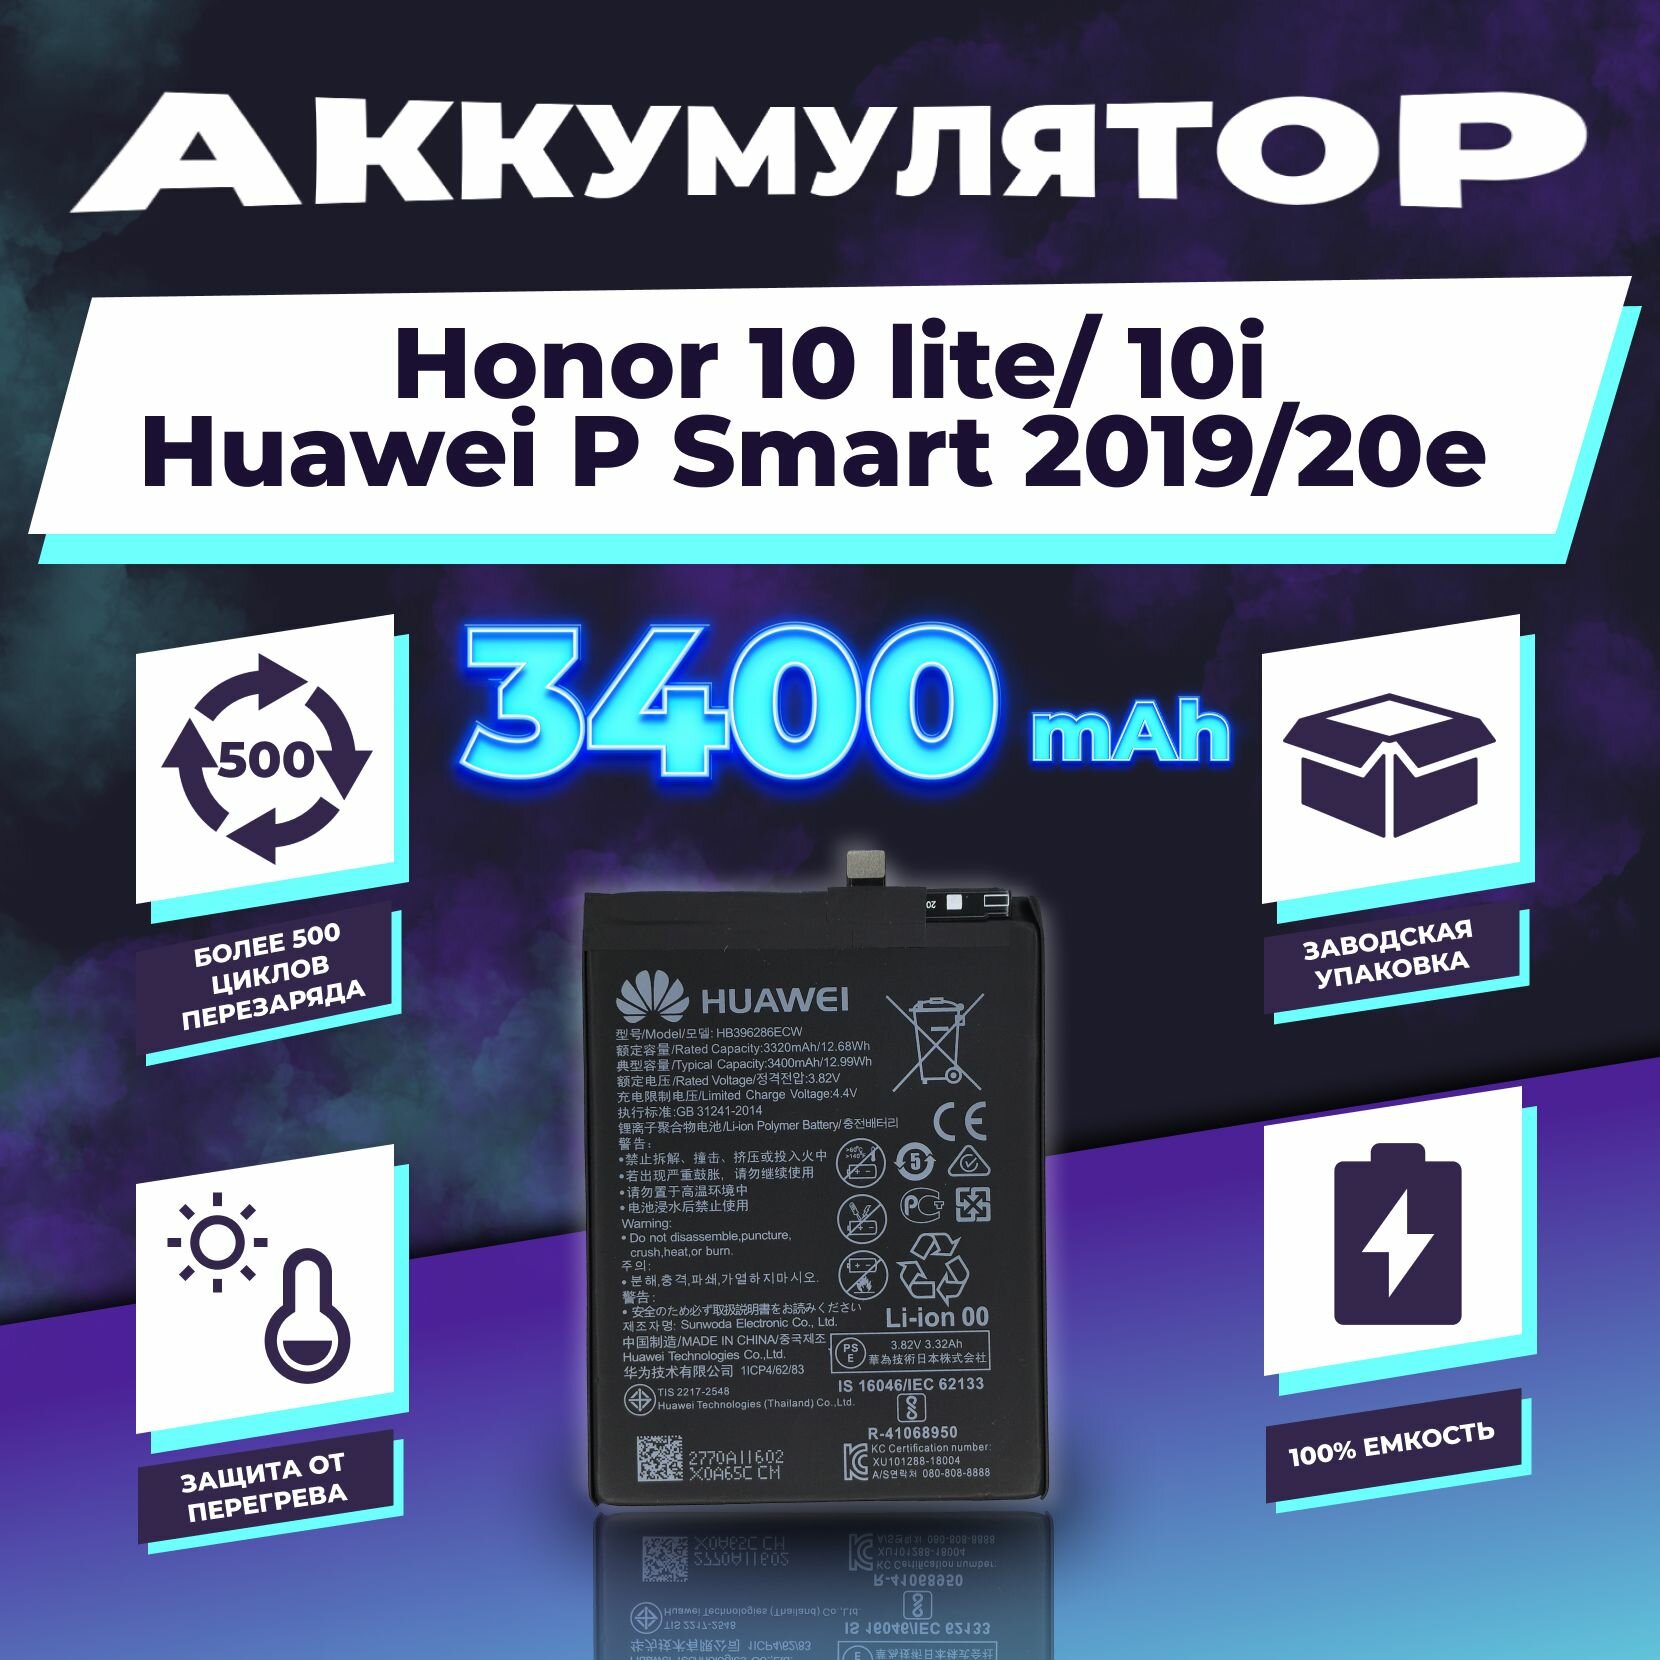 Аккумулятор для Honor 10 lite/10i и Huawei P Smart 2019/20e